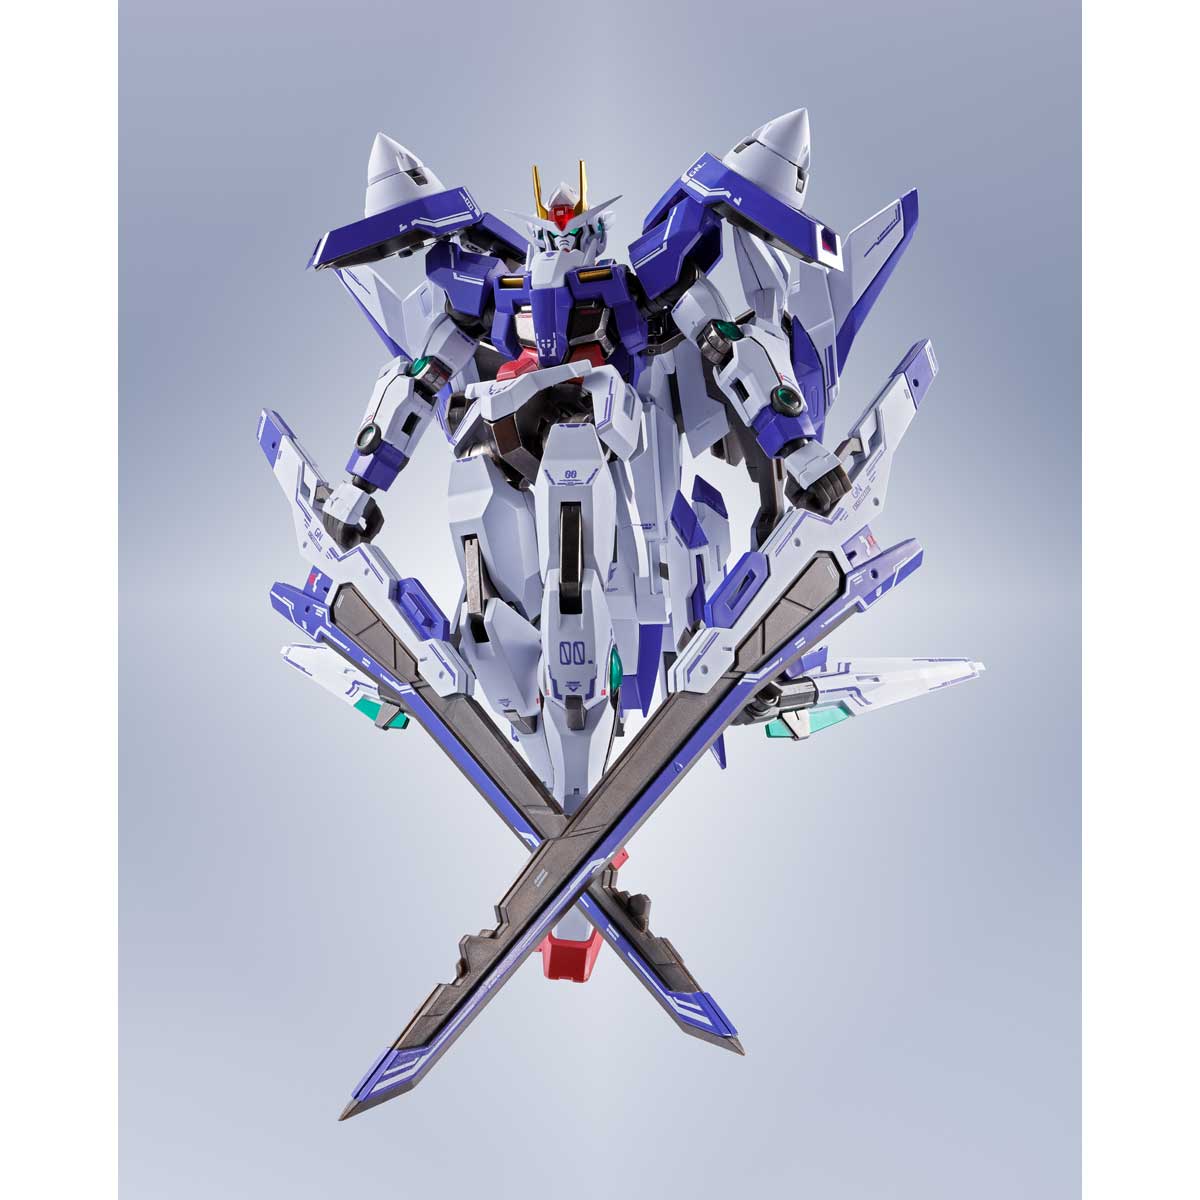 Metal Robot Spirits Side Ms 00 Xnraiser Seven Sword Gn Sword Blaster Set Gundam Premium Bandai Singapore Online Store For Action Figures Model Kits Toys And More